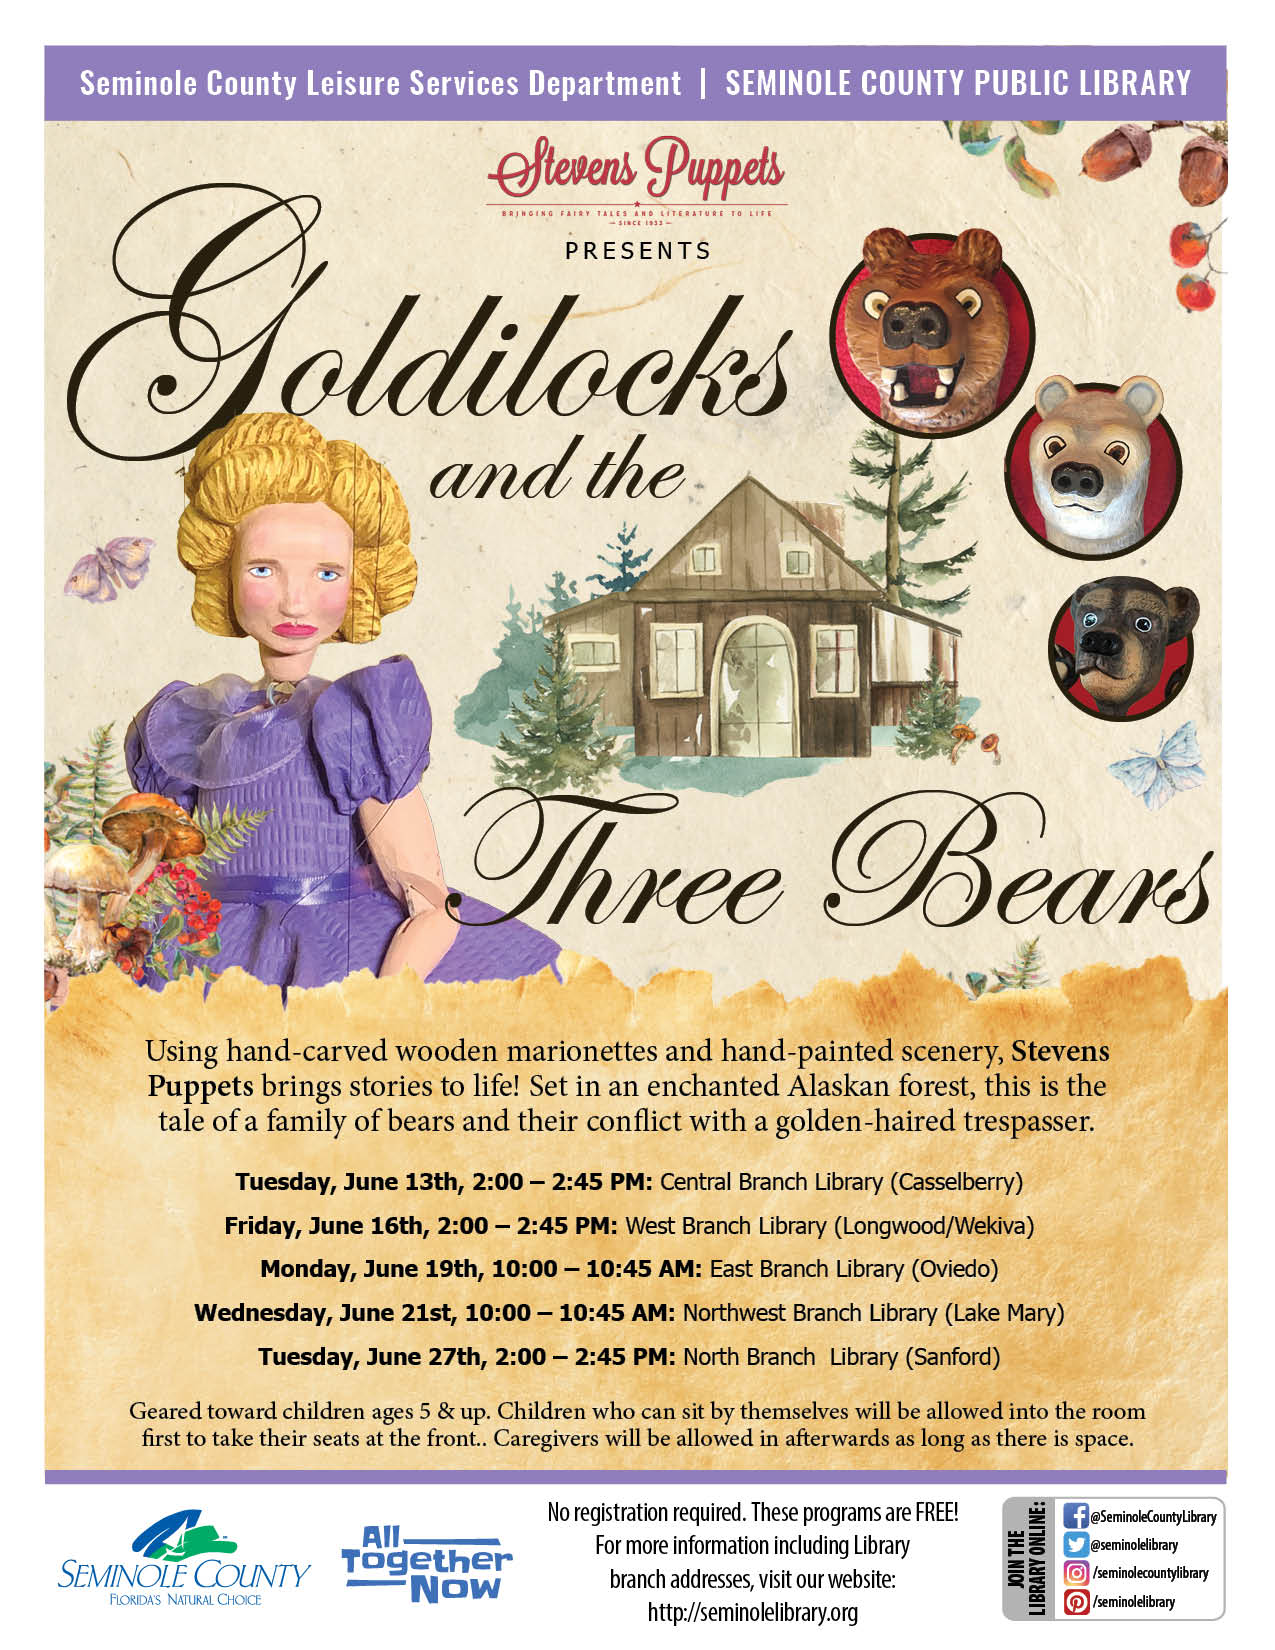 Stevens Puppets - Goldilocks and the Three Bears